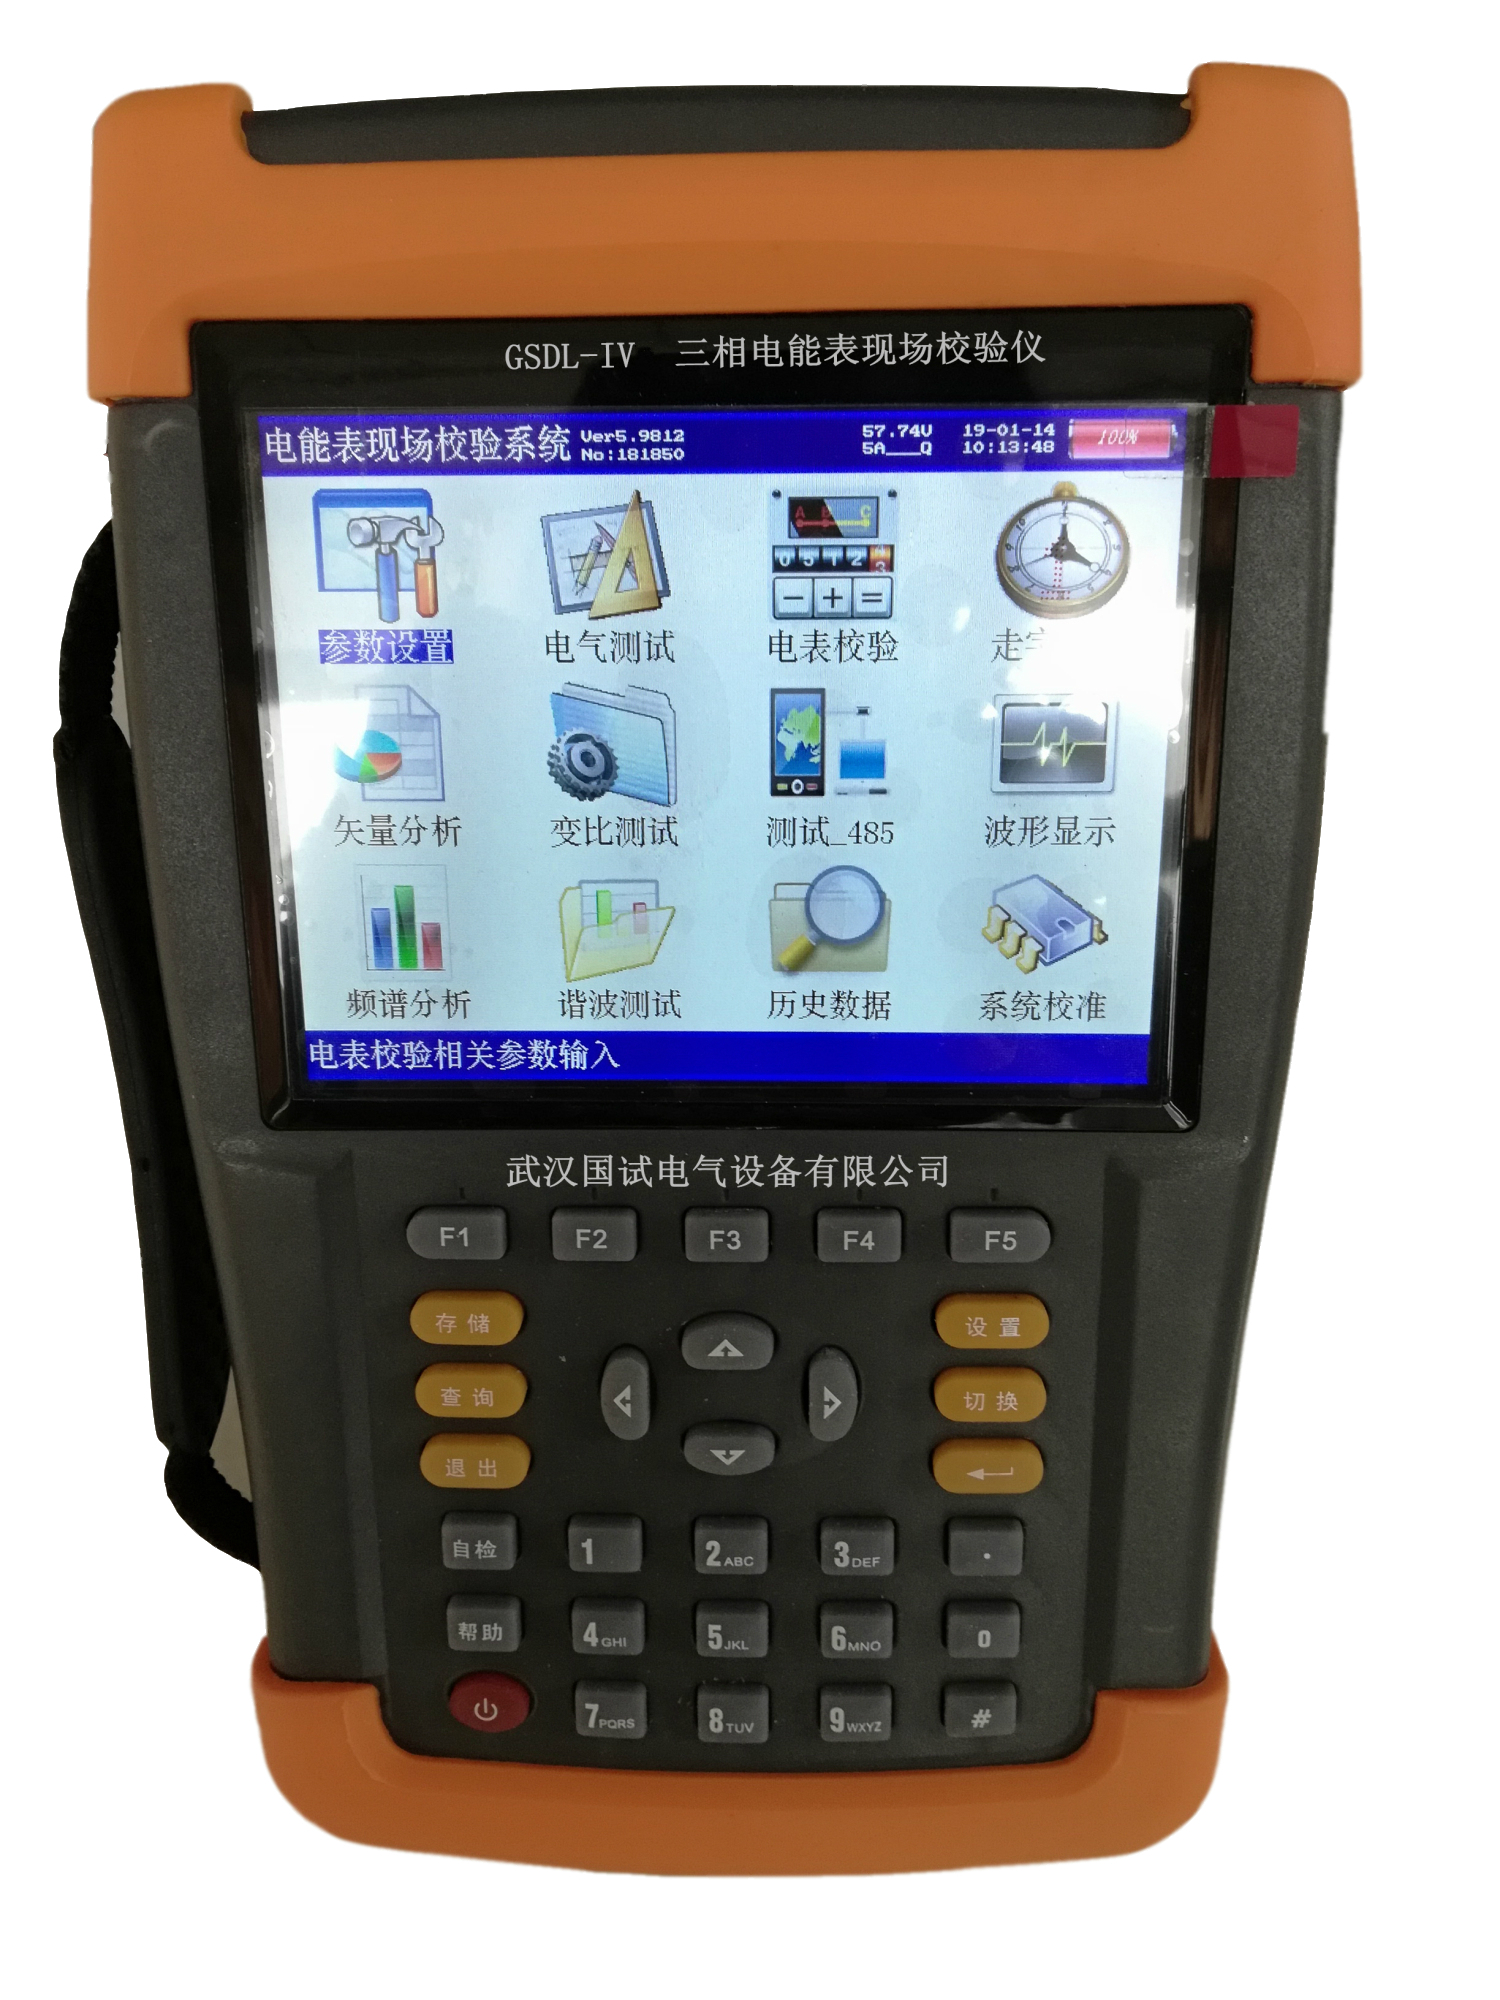 09.GSDL-IV手持式三相电能表现场检验仪